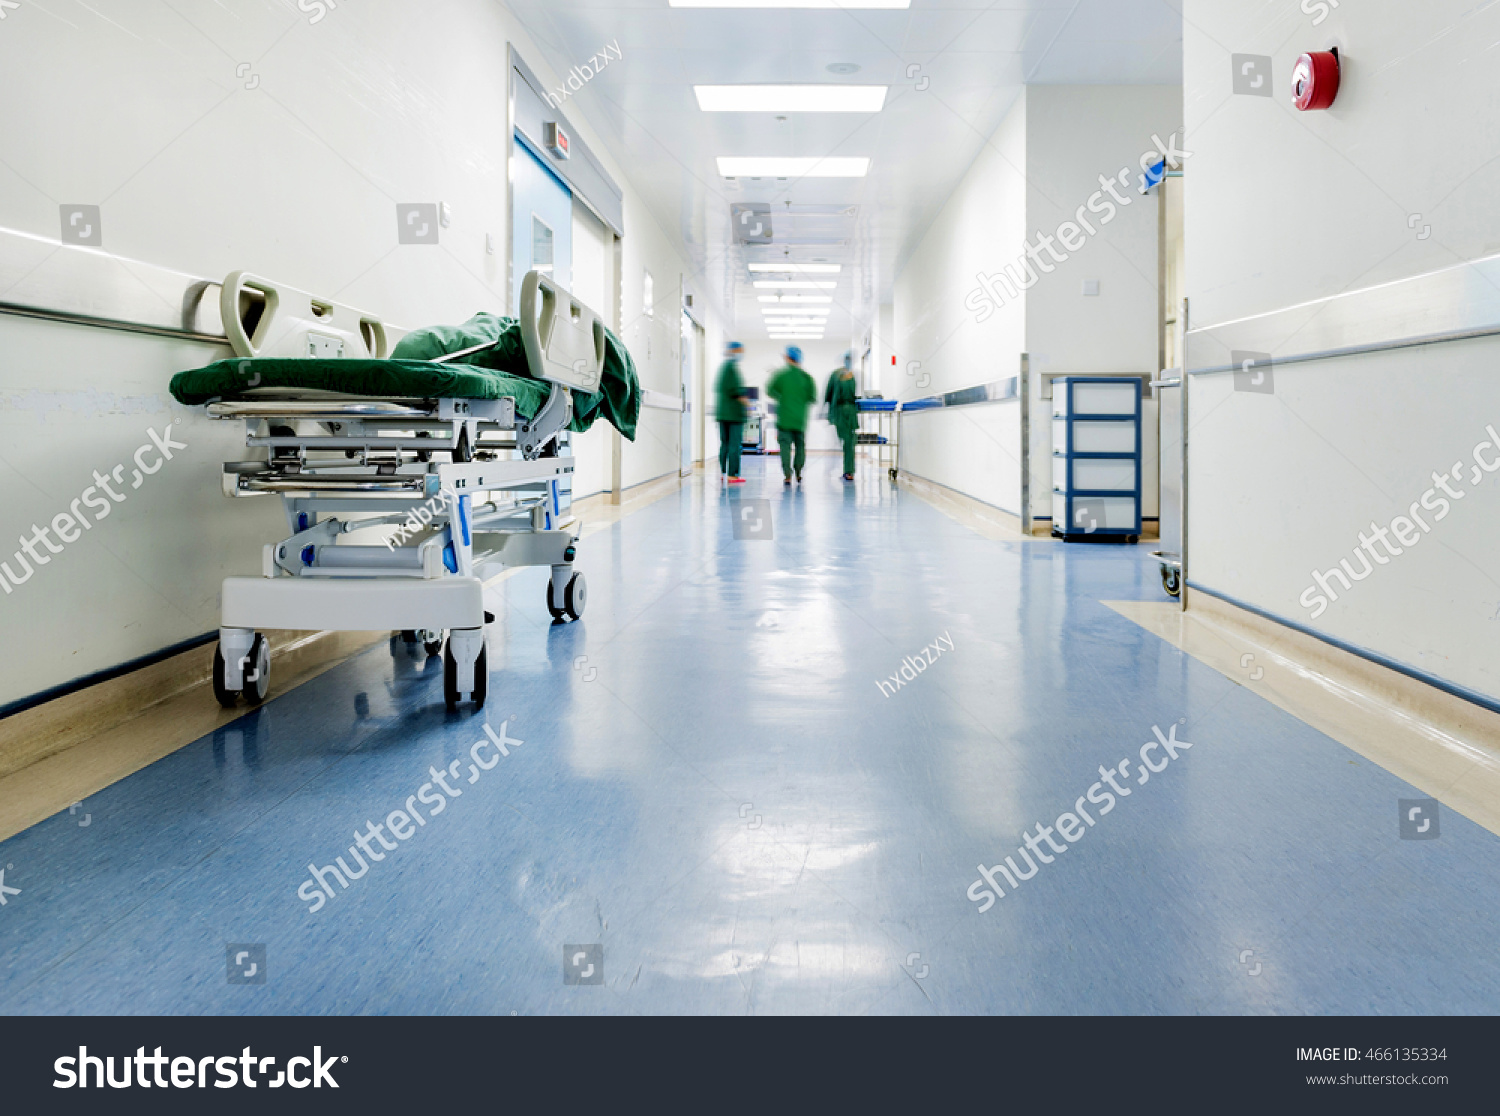 Doctors and nurses walking in hospital hallway, blurred motion.  #466135334